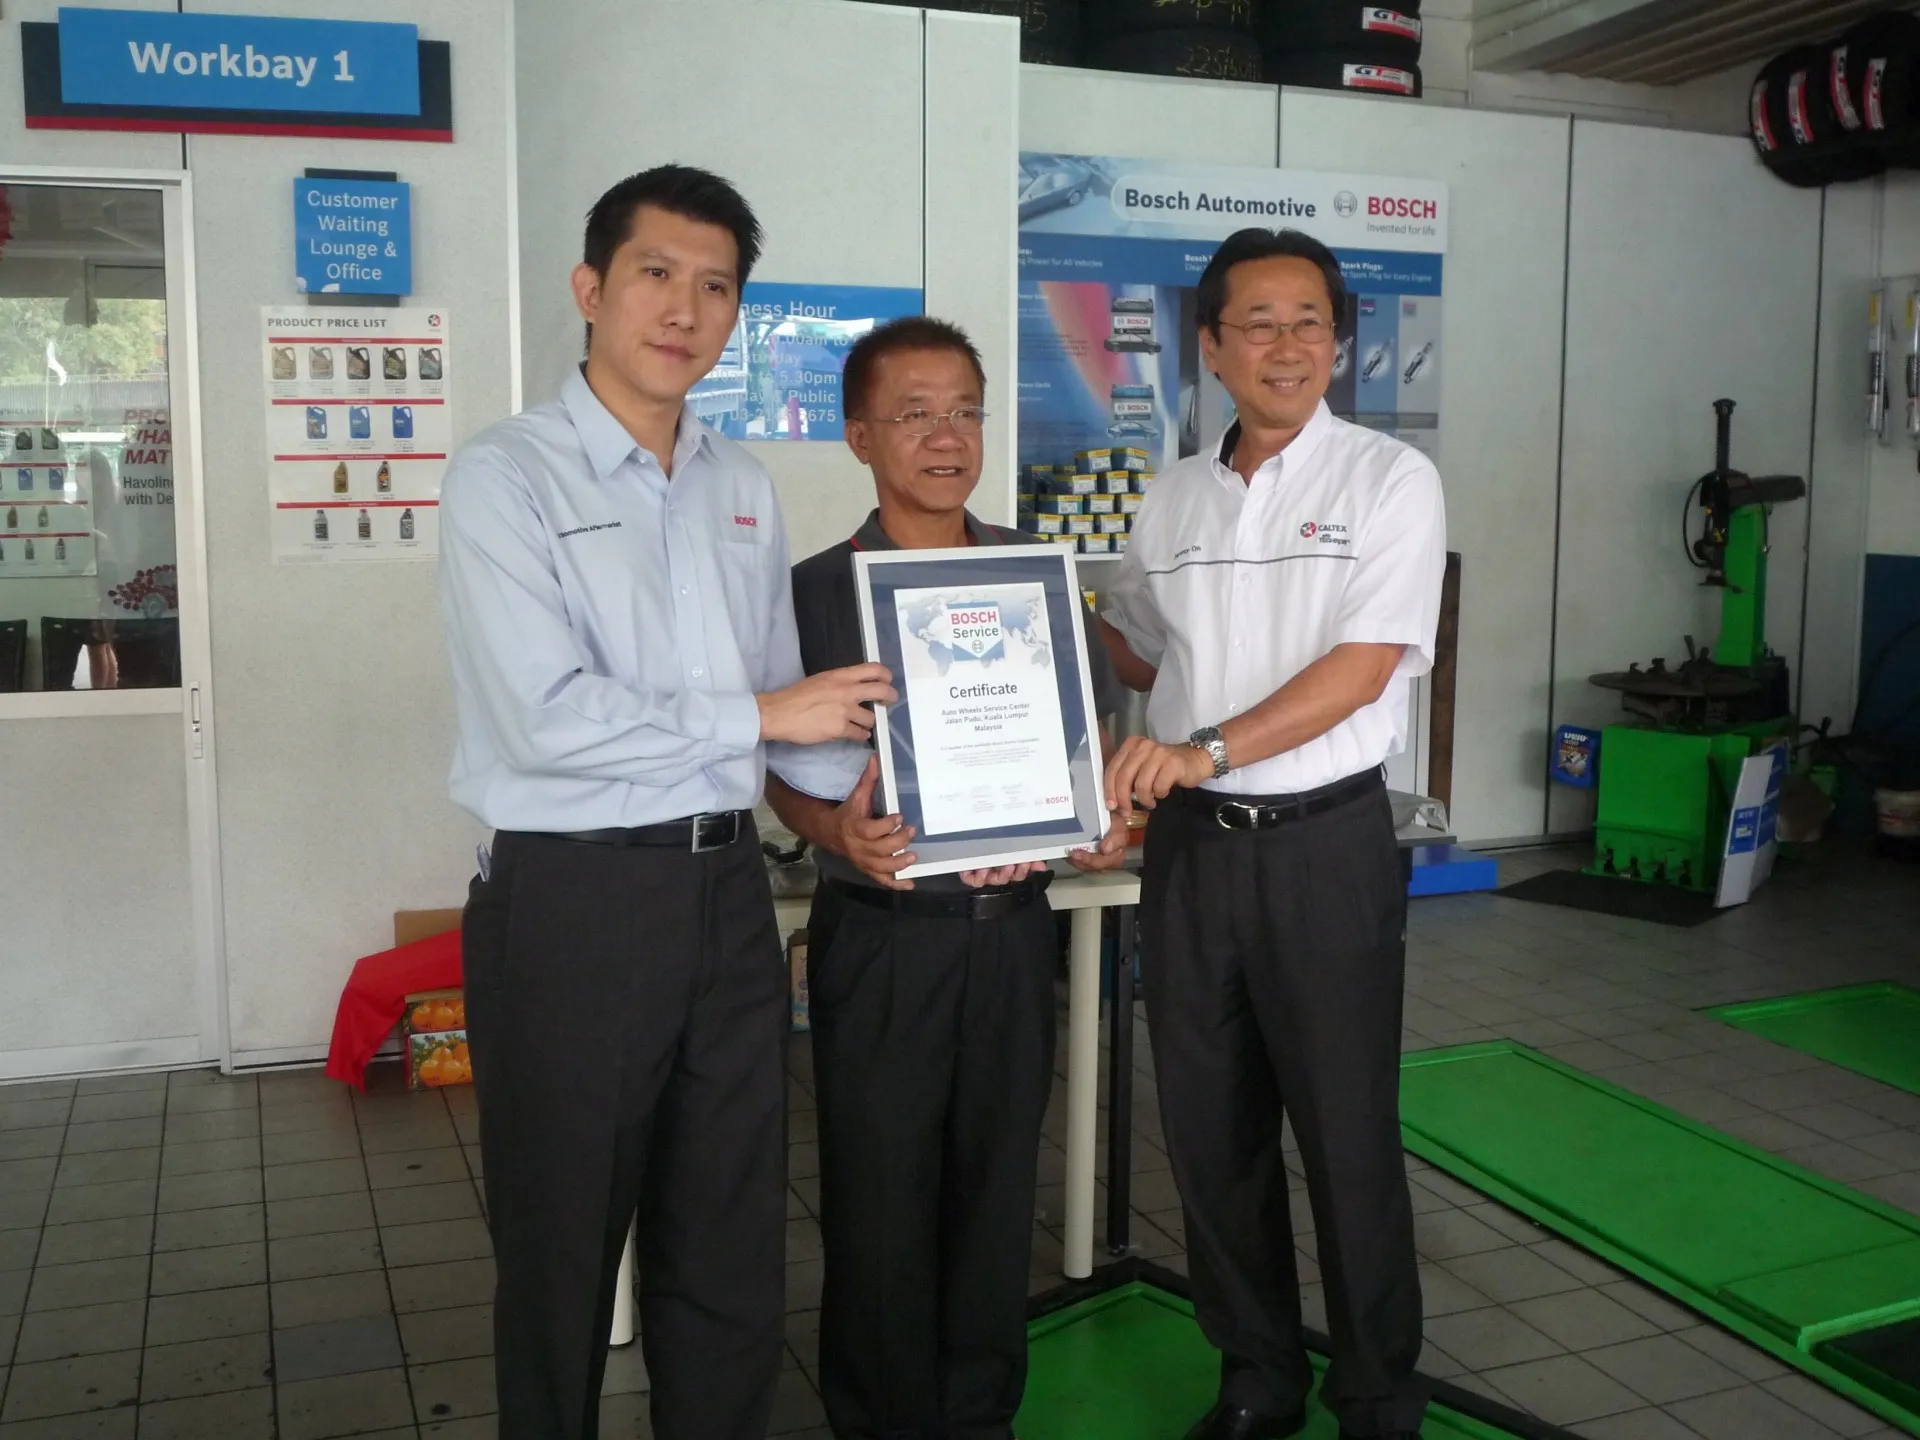 Chevron-Bosch Partnership Launches First Bosch Car Service Workshop at Caltex® Jalan Pudu, Kuala Lumpur [1]